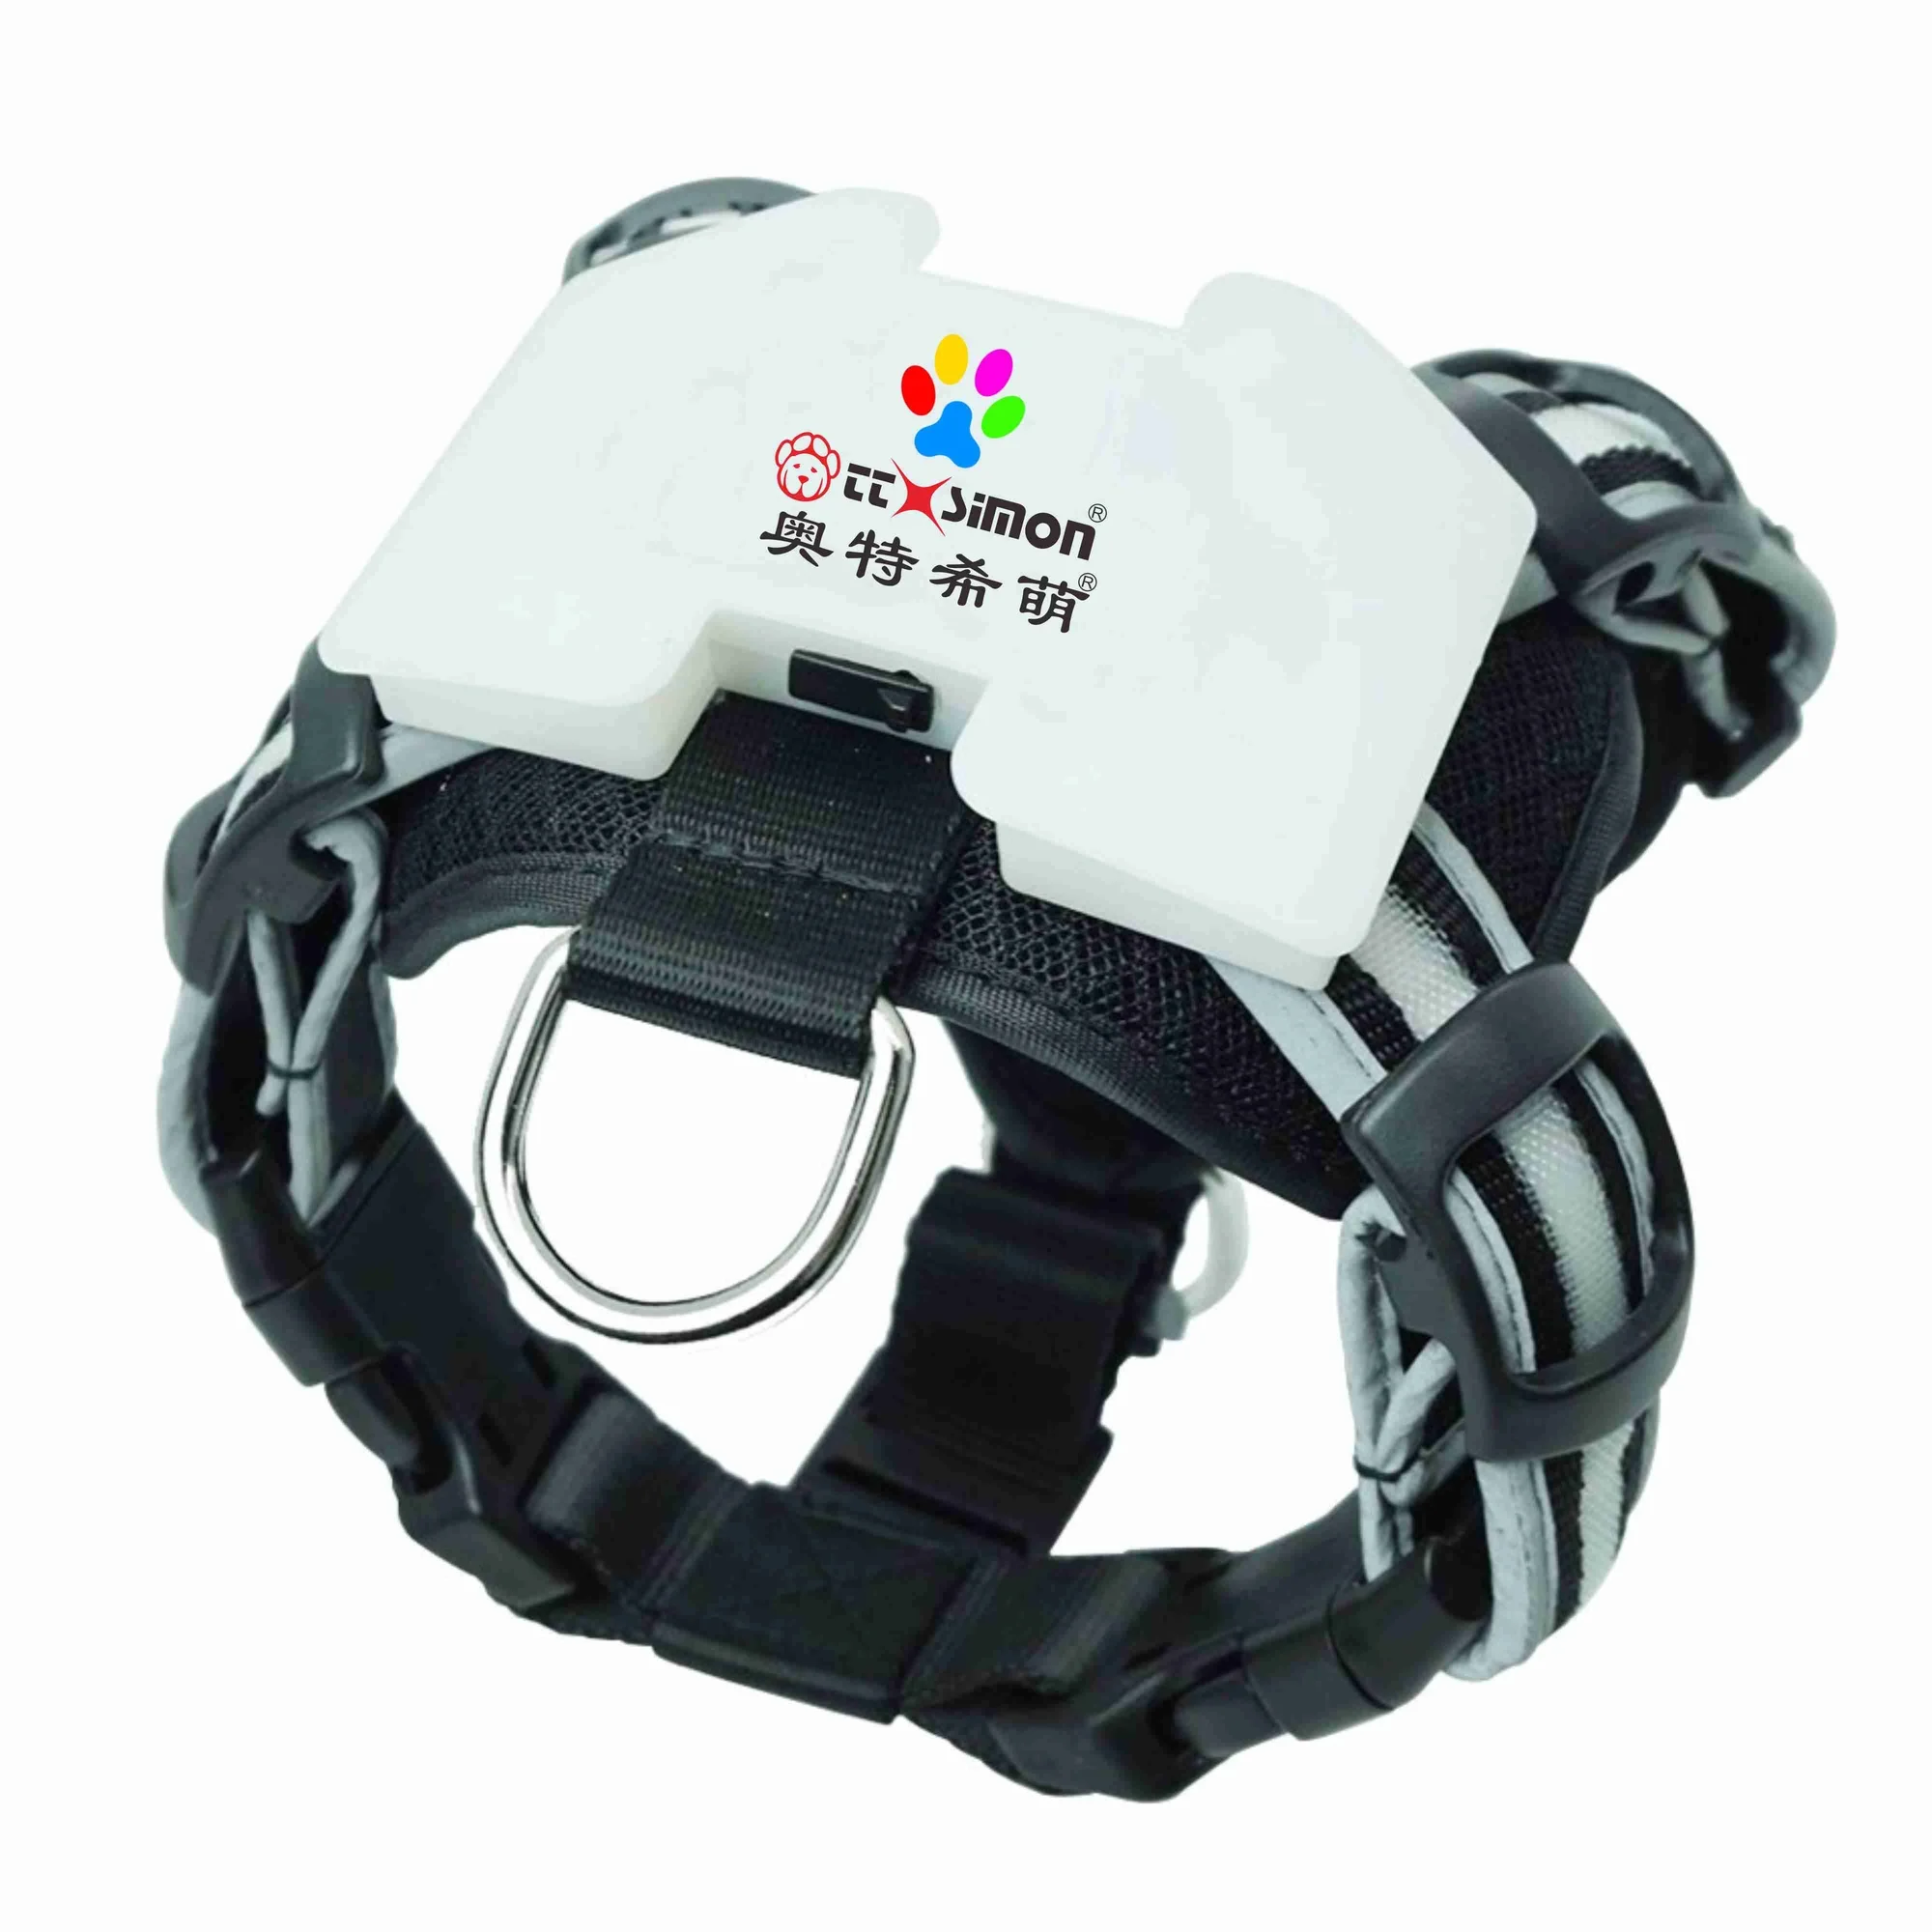 

dog collar with led light dog led electric dog collar cc cimon harness